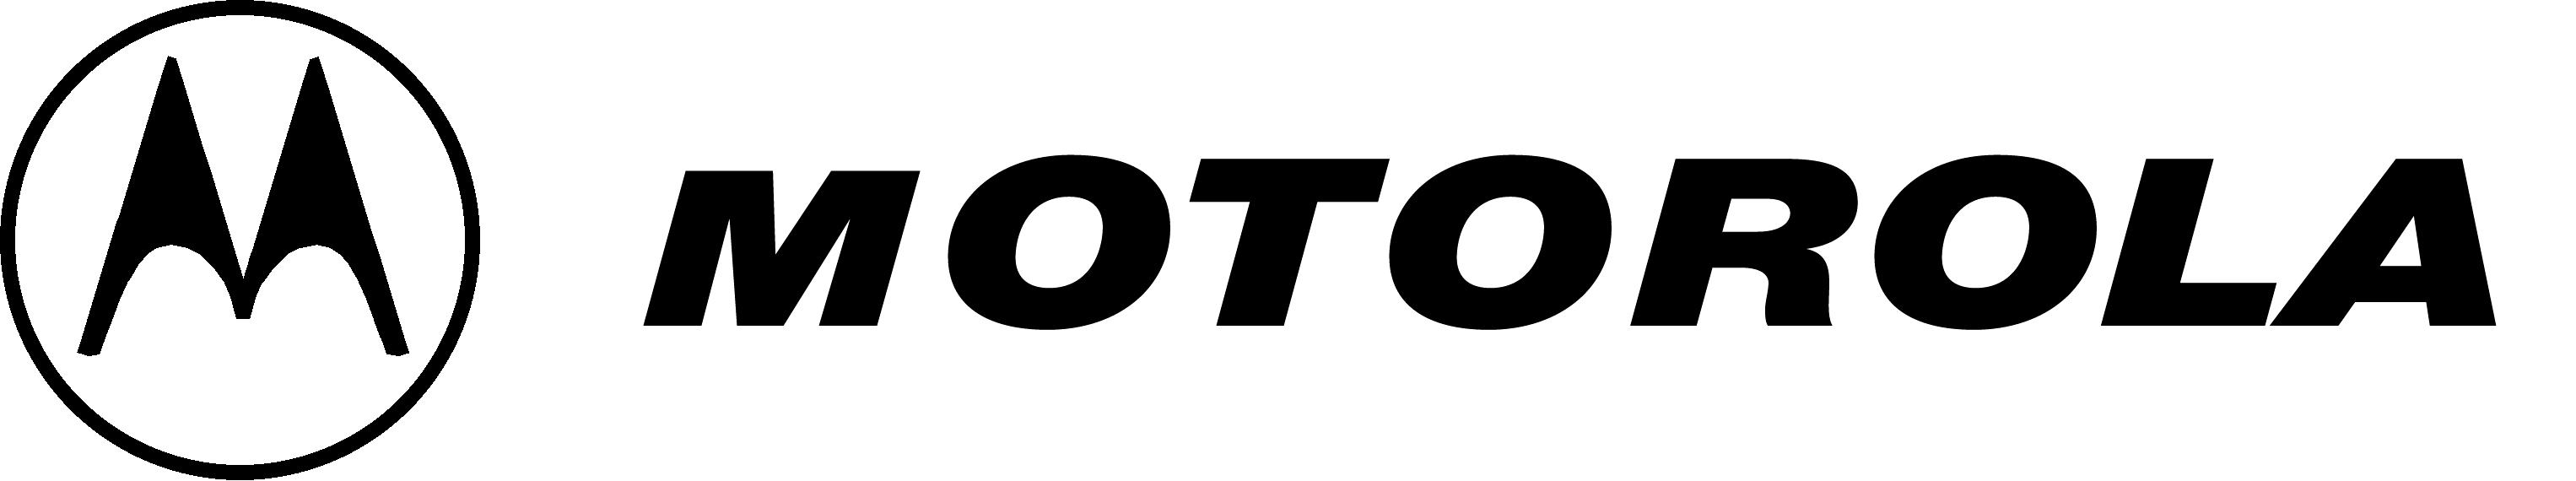 Motorola-logo2